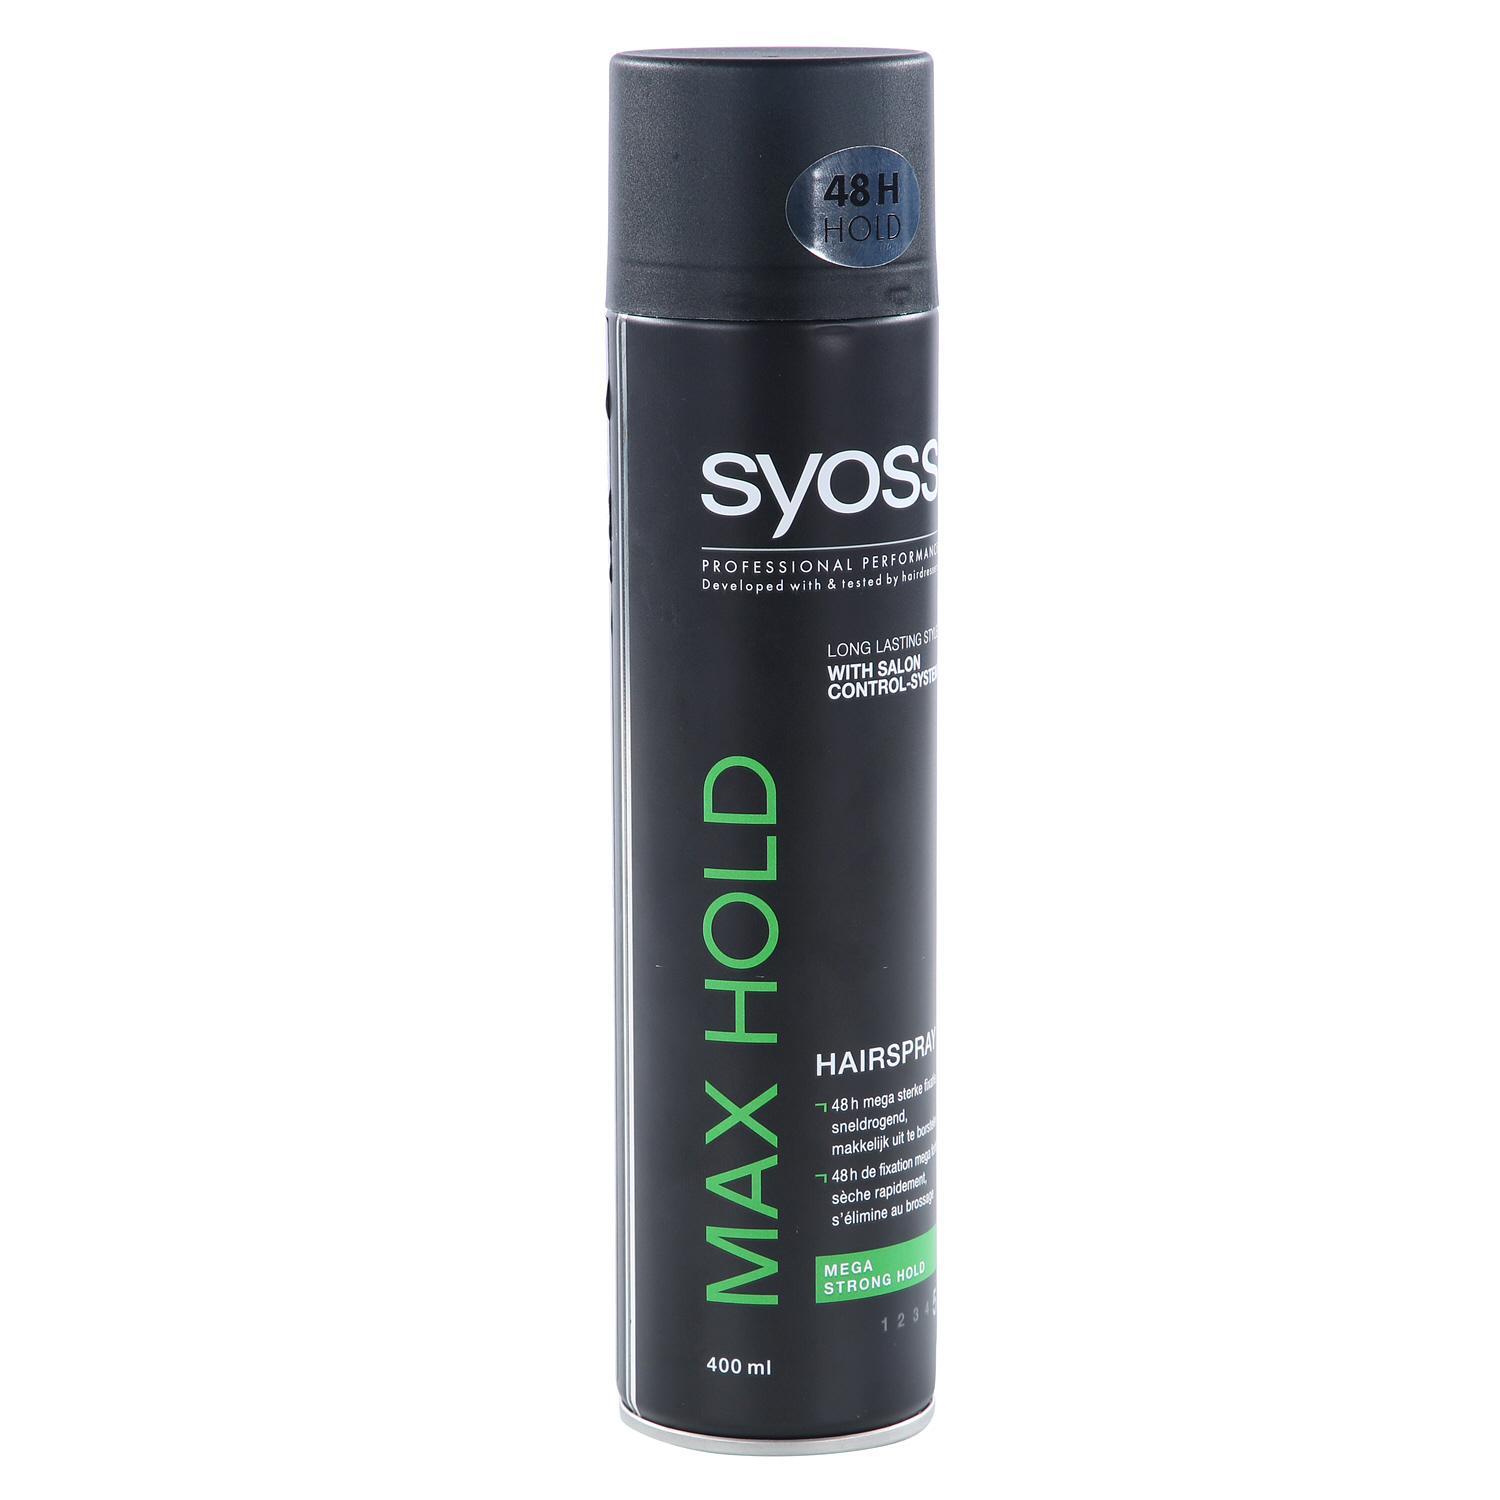 Syoss Hair Spray Max Hold 400ml